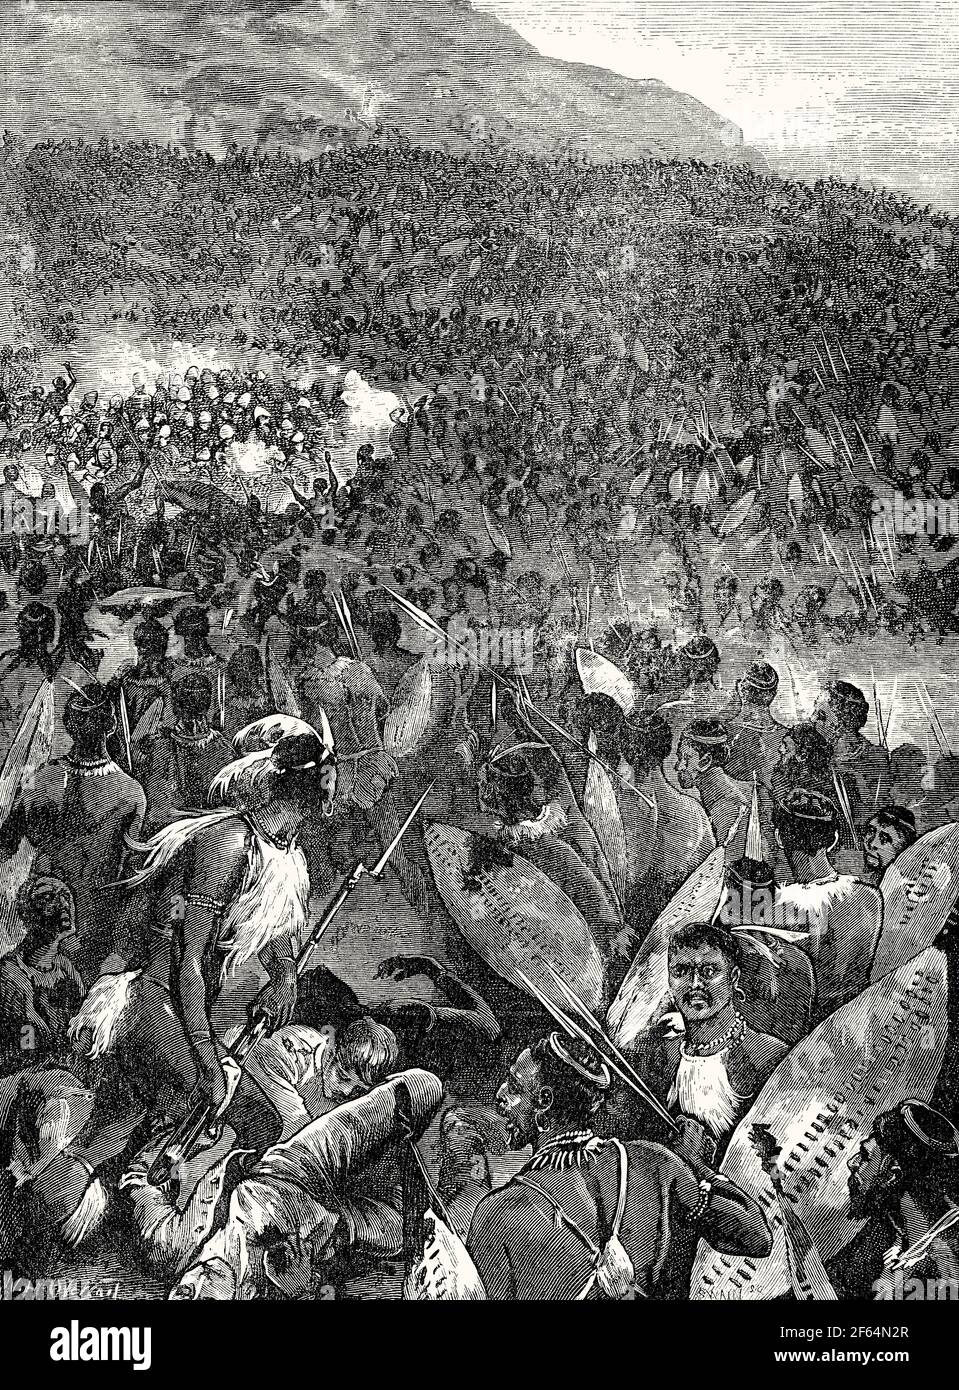 Zulu warriors, Battle of Isandlwana, Anglo-Zulu War on 22 January 1879 Stock Photo